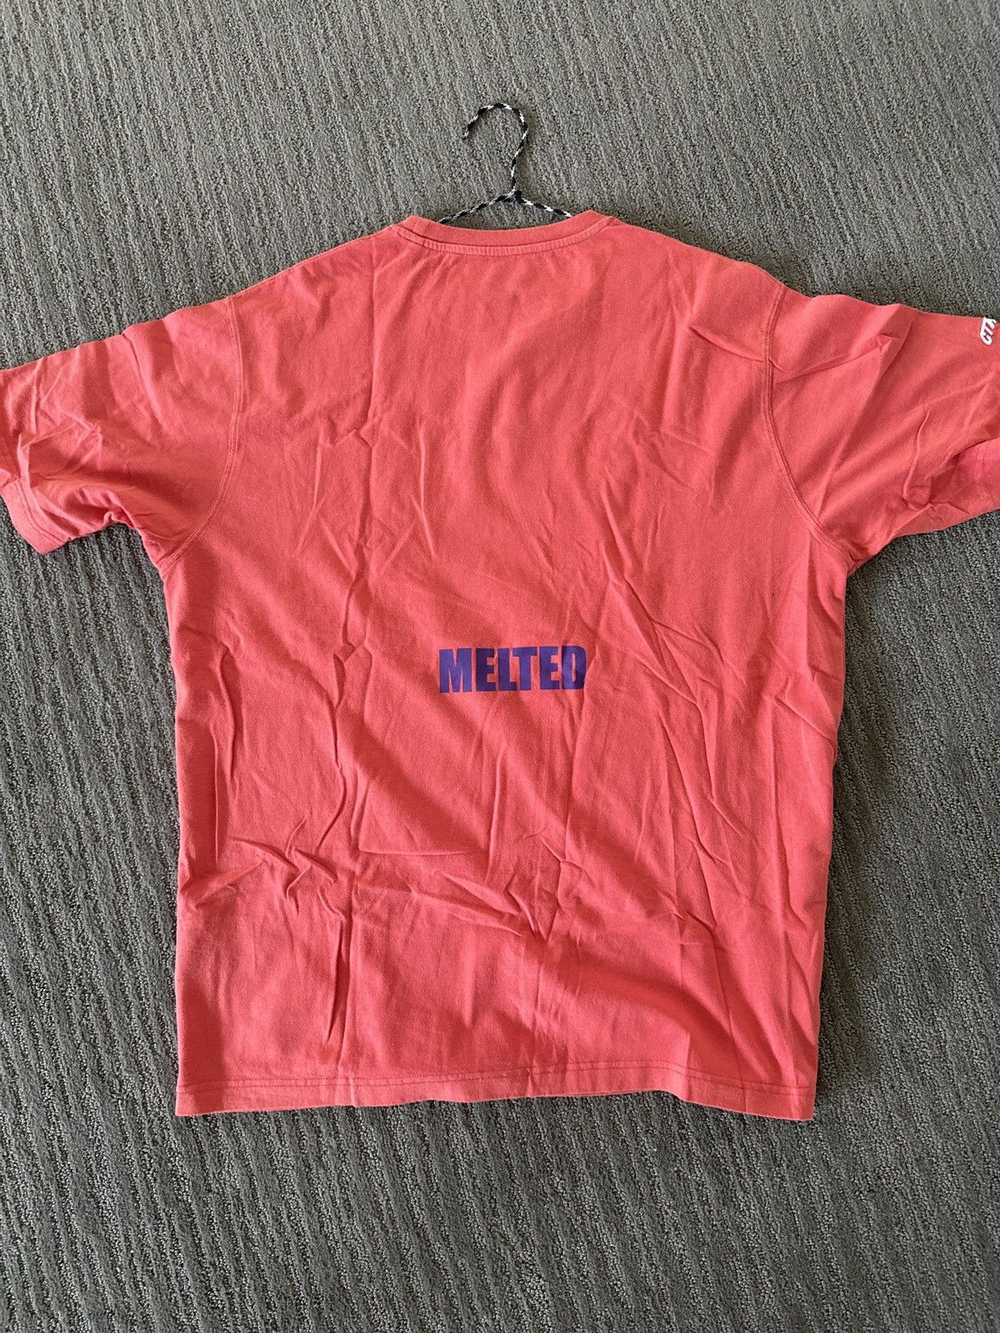 Heron Preston Culture Printed Oversized T-Shirt - image 2